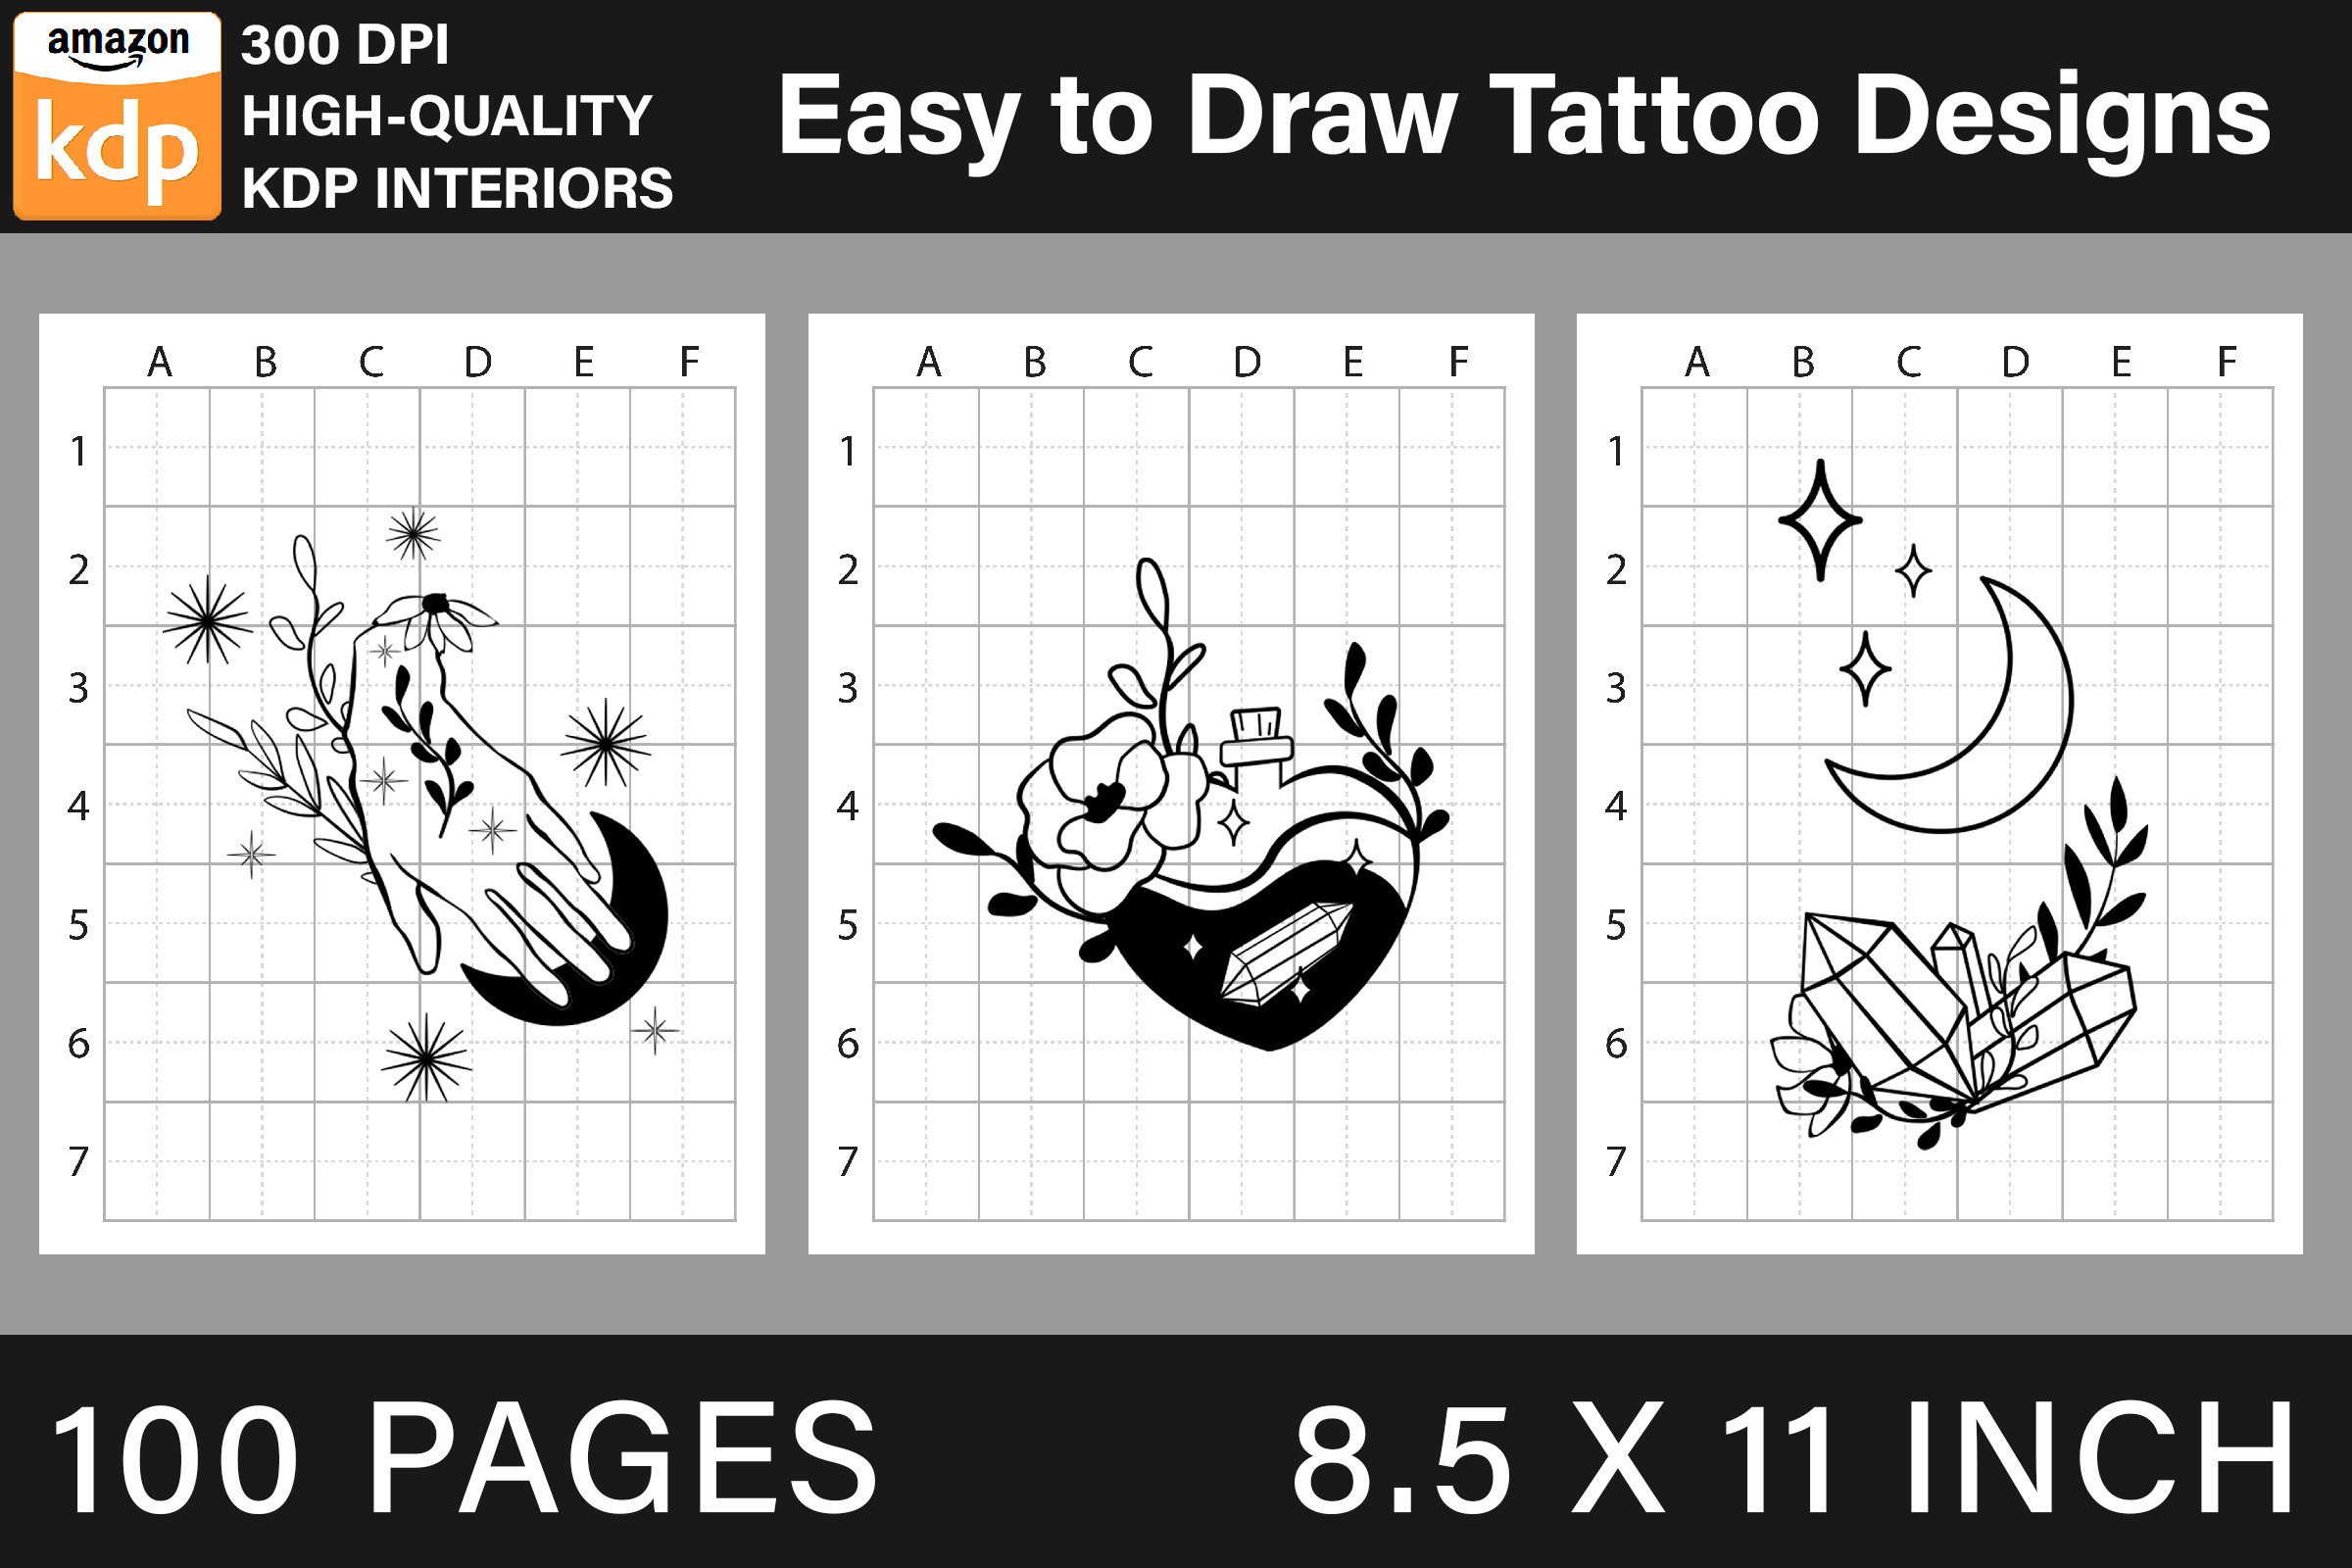 easy tattoos designs draw